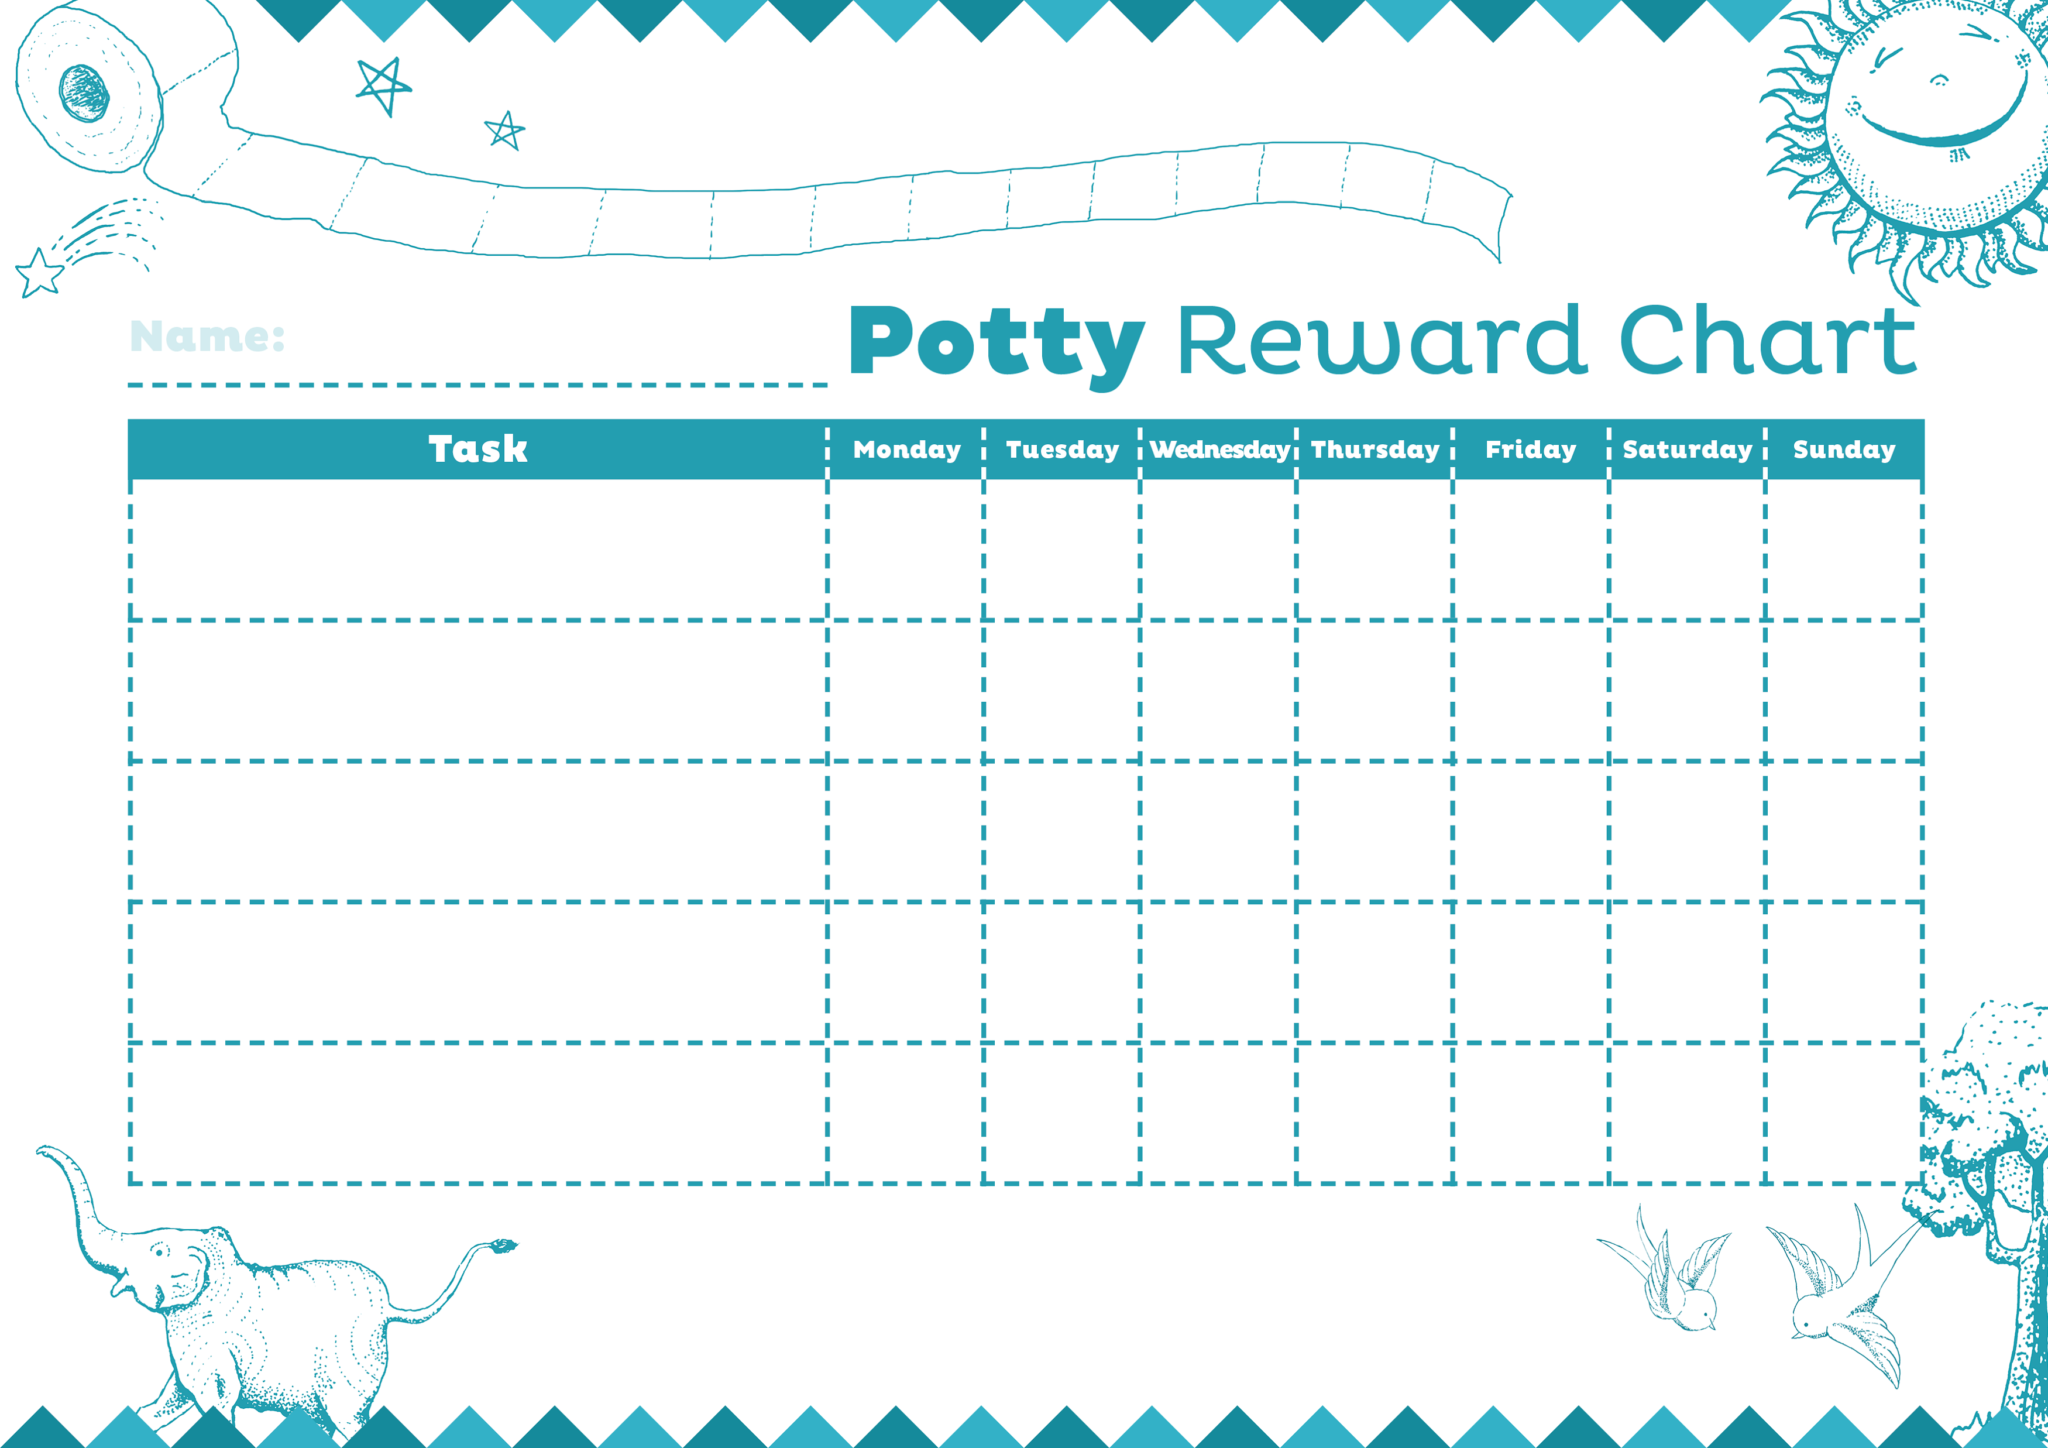 Potty Reward Charts Template | Activity Shelter inside Blank Reward ...